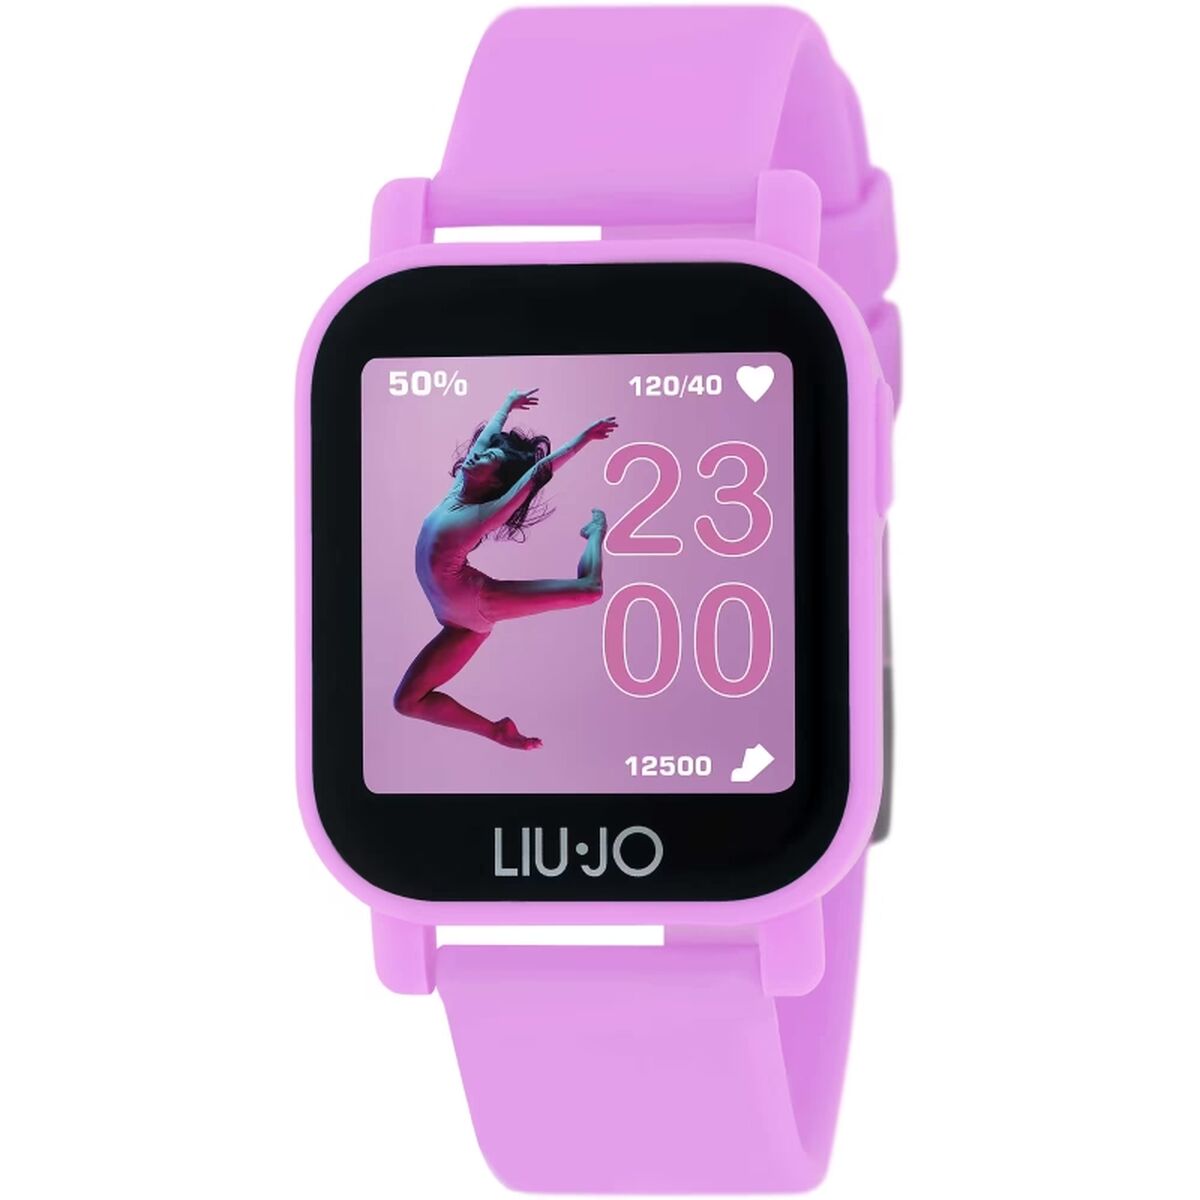 Kaufe Smartwatch LIU JO SWLJ028 bei AWK Flagship um € 112.00